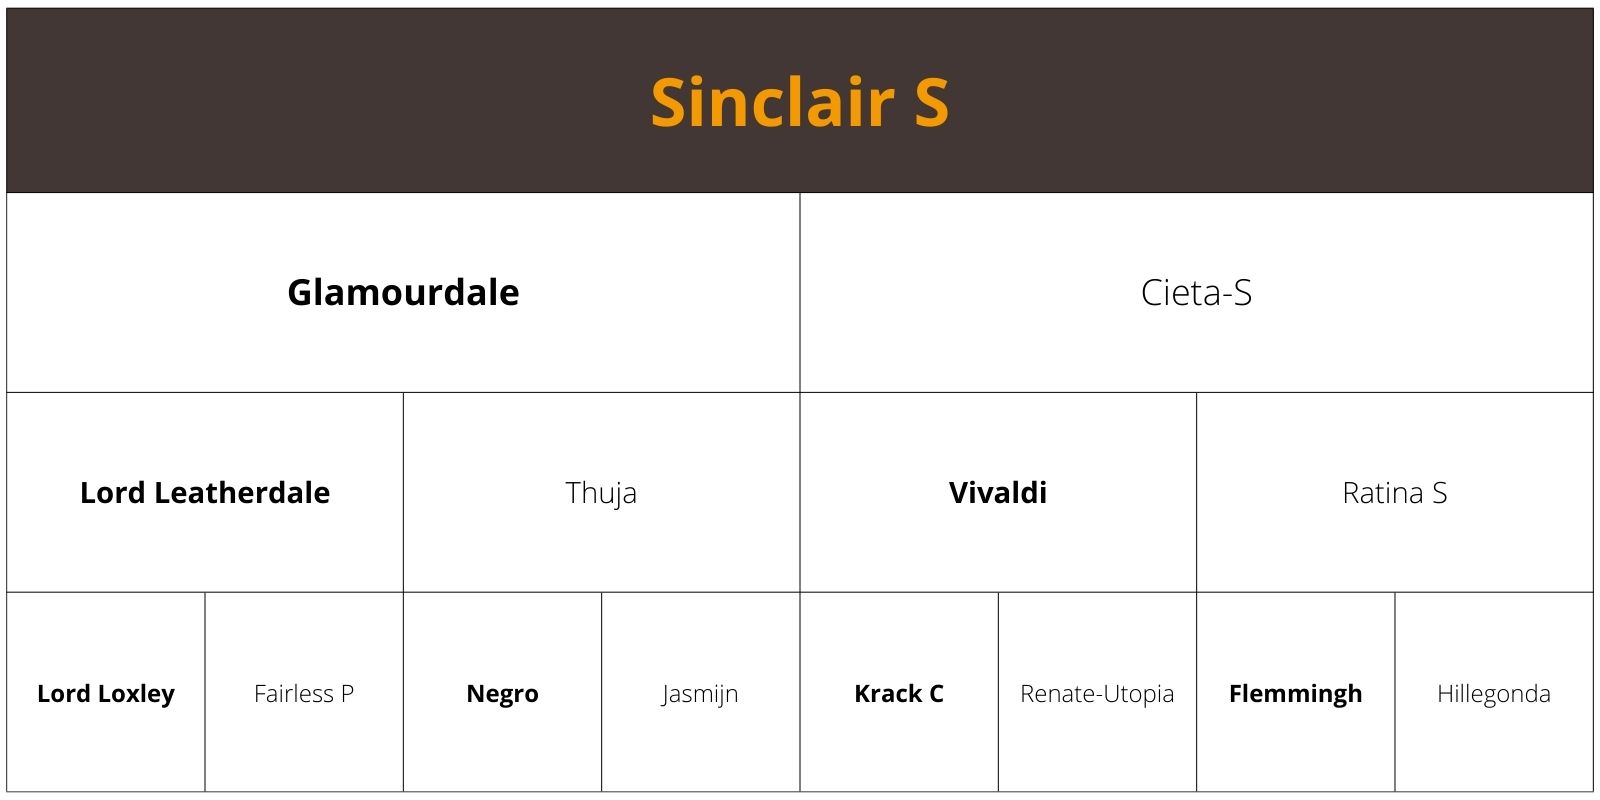 Sinclair S